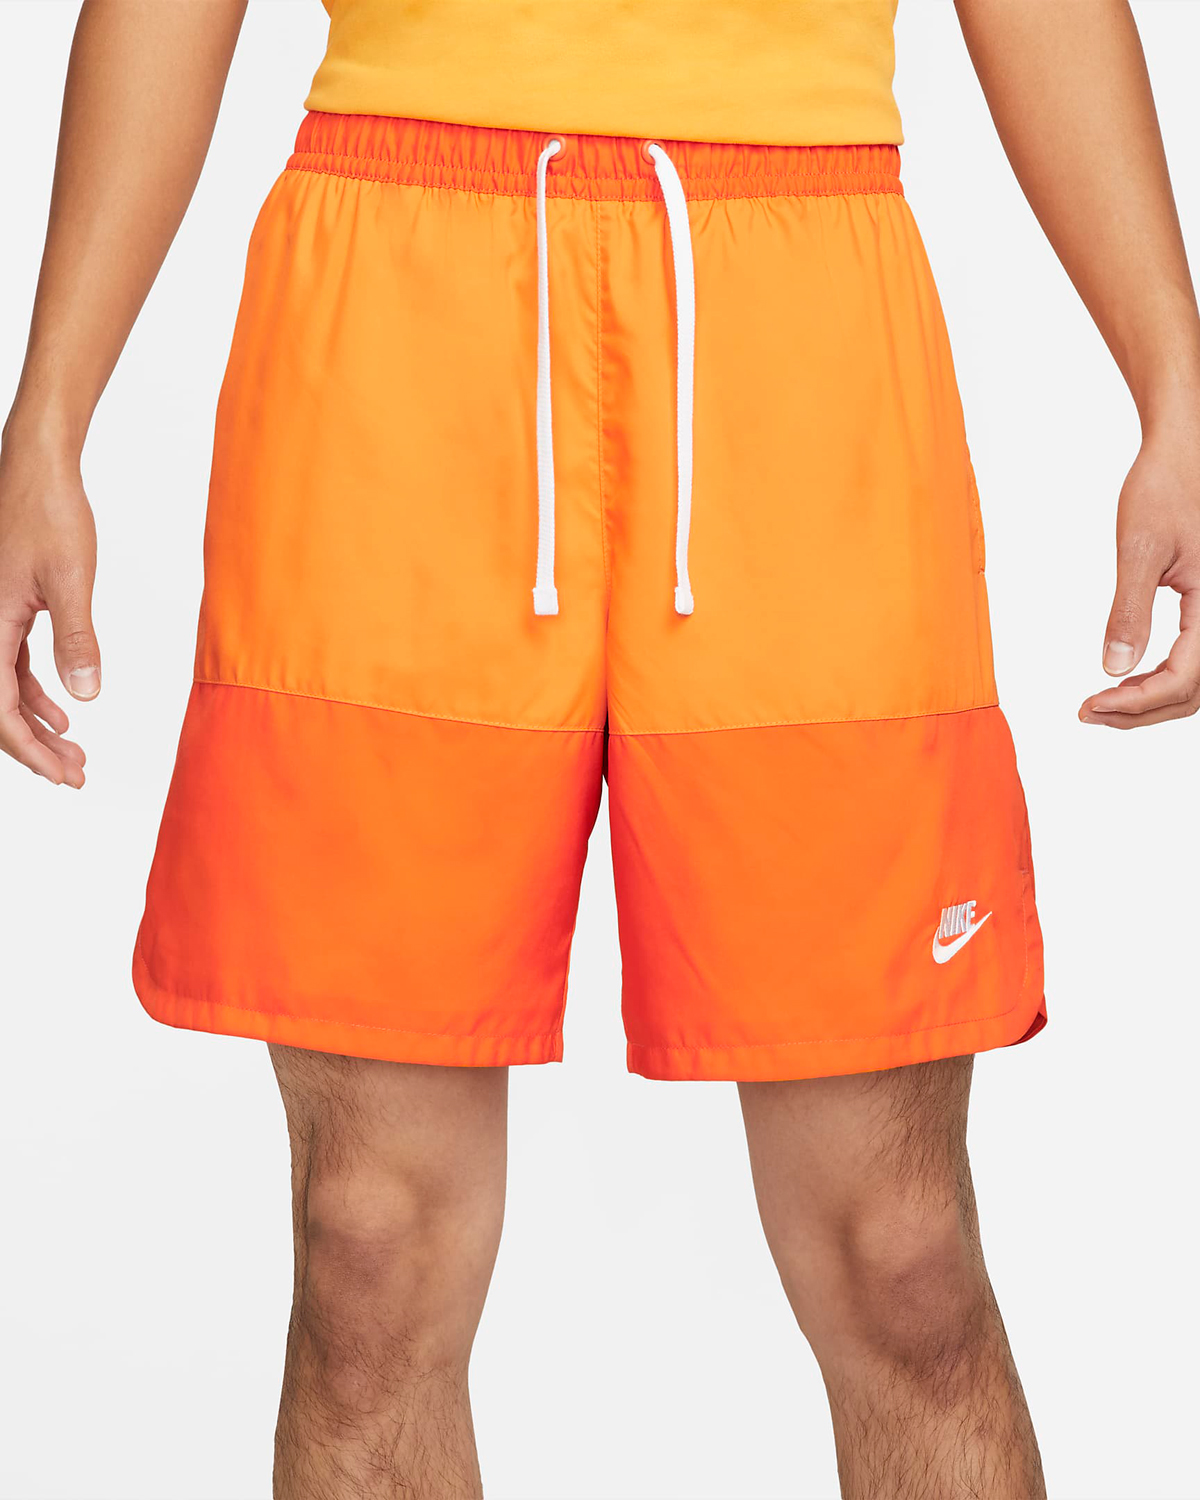 nike-woven-lined-flow-shorts-magma-orange-kumquat